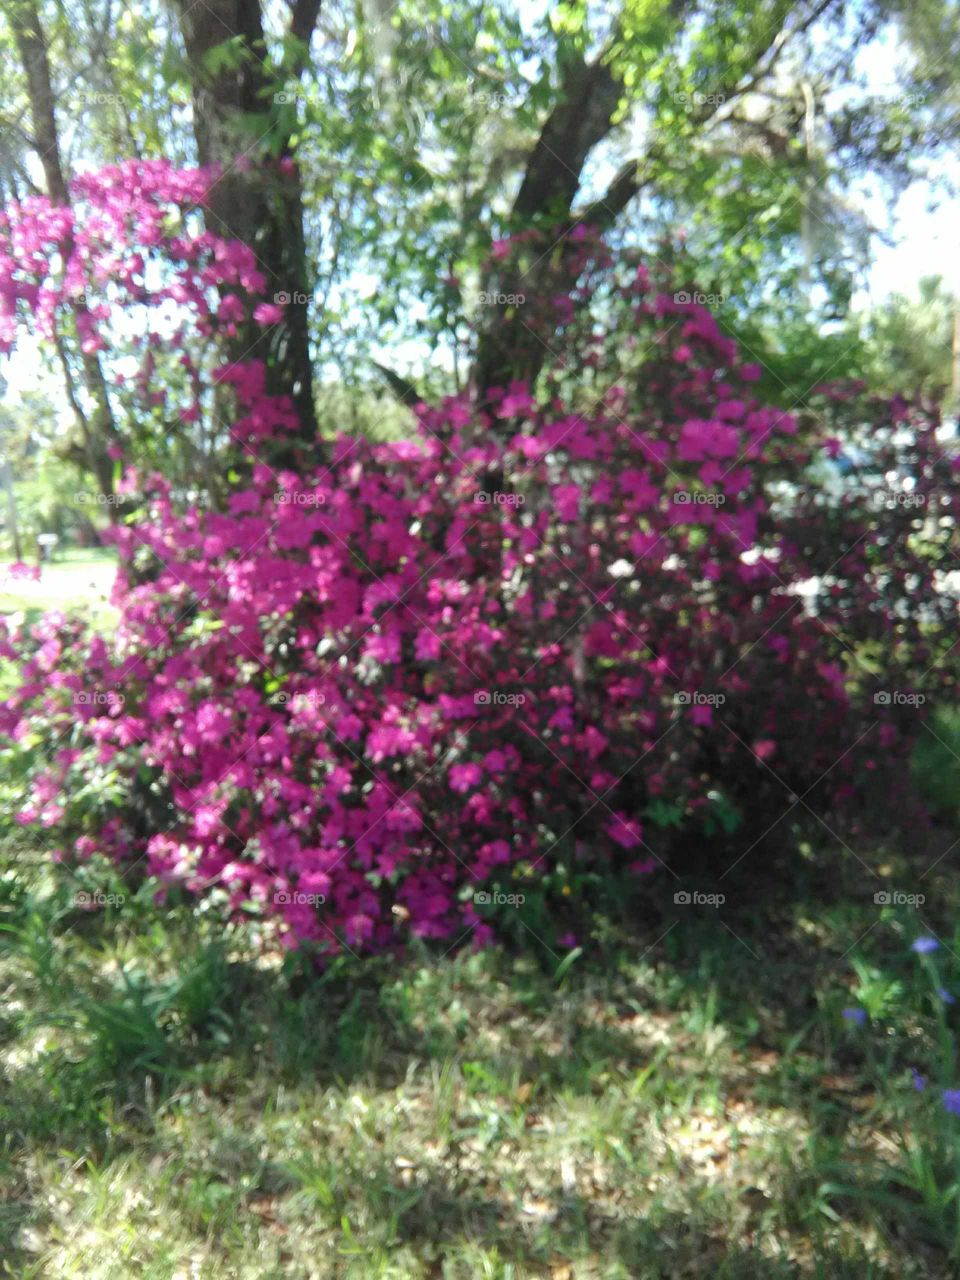 Flowering Florida shrub.